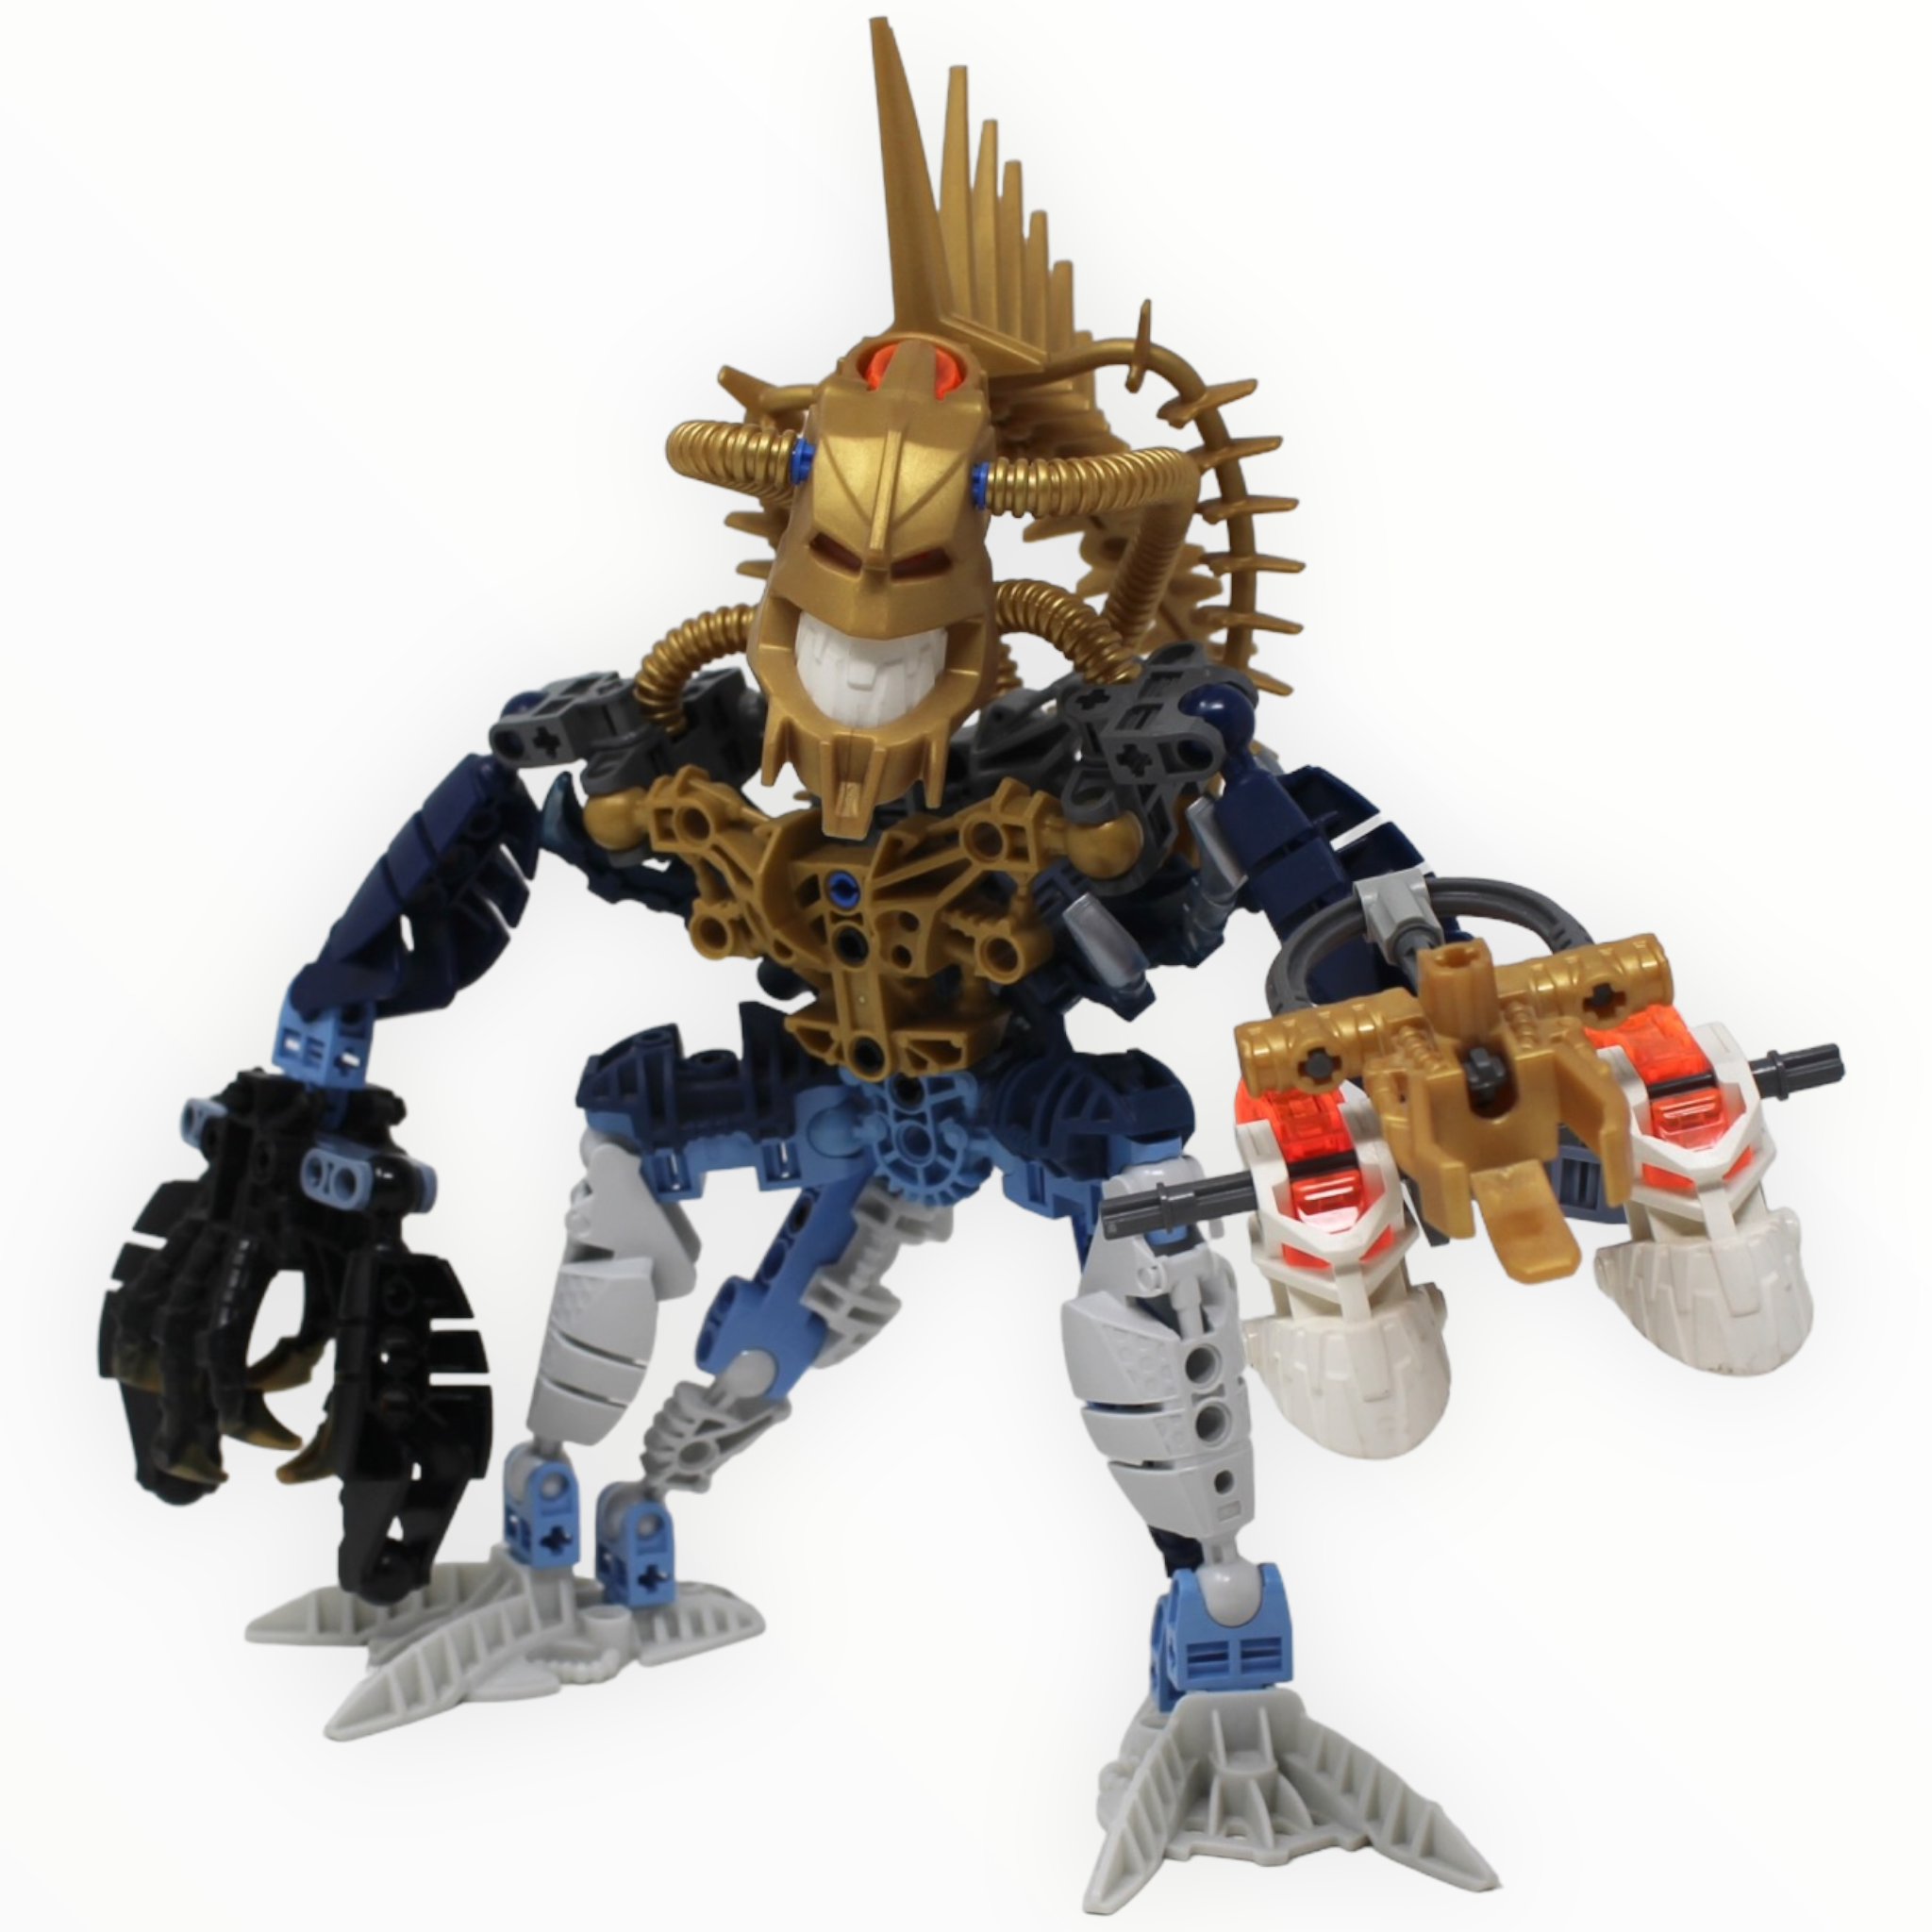 Used Set 8626 Bionicle Irnakk